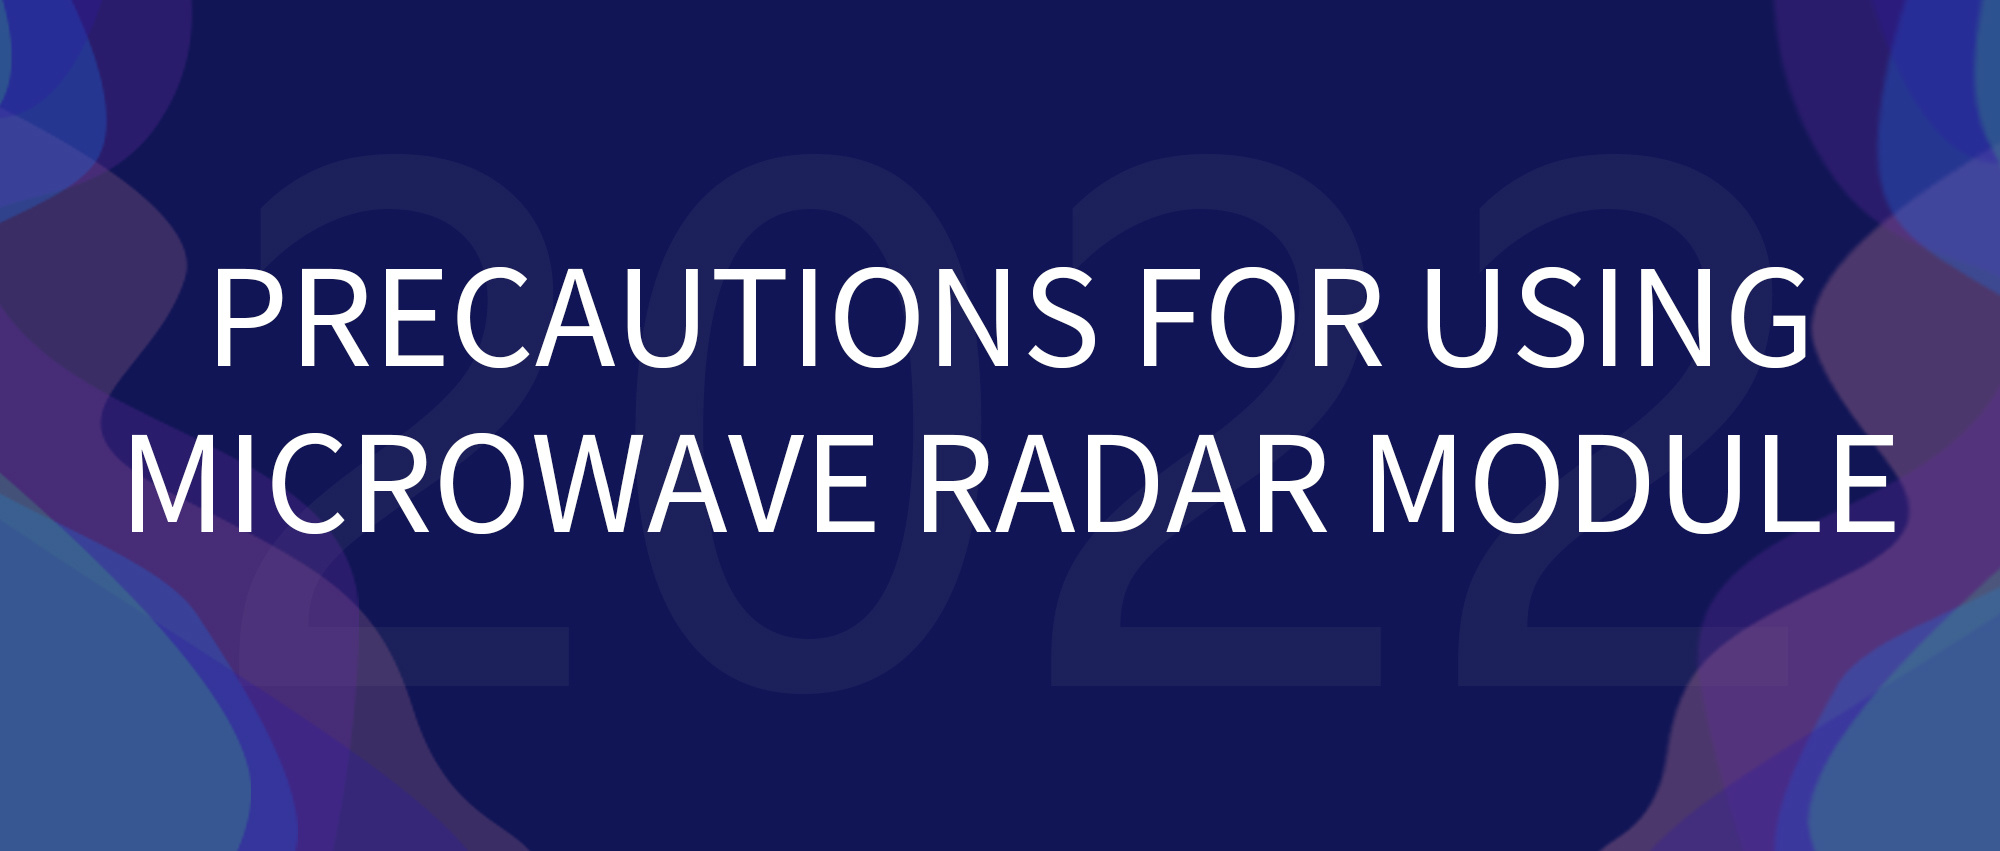 User Guidance | Precautions for Using Microwave Radar Module